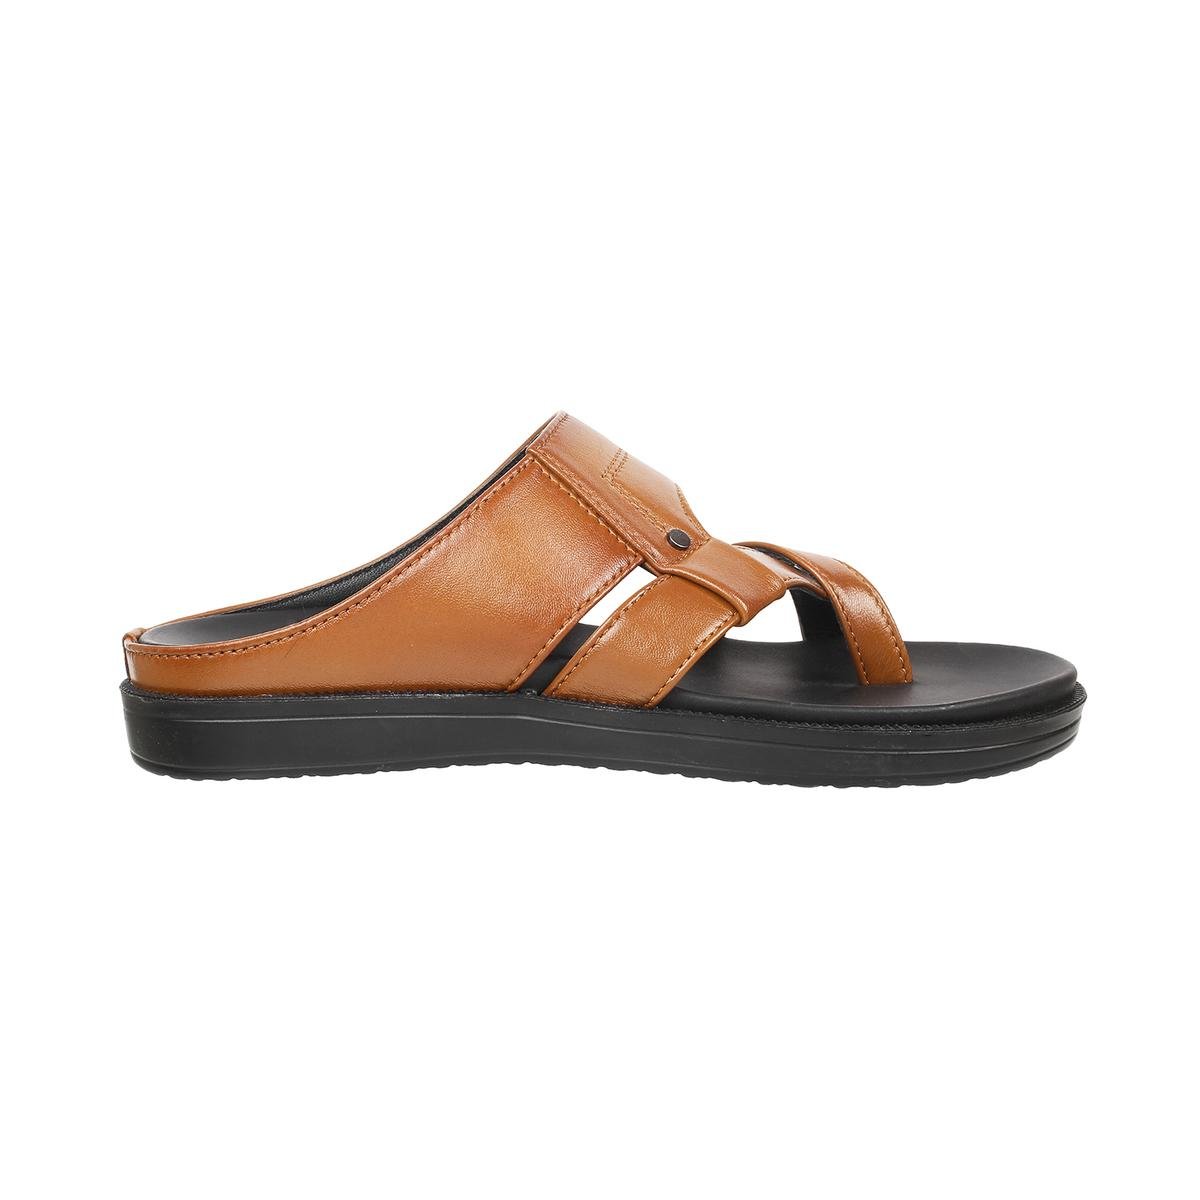 Buy Men Tan Casual Slippers Online | SKU: 16-194-23-40-Metro Shoes